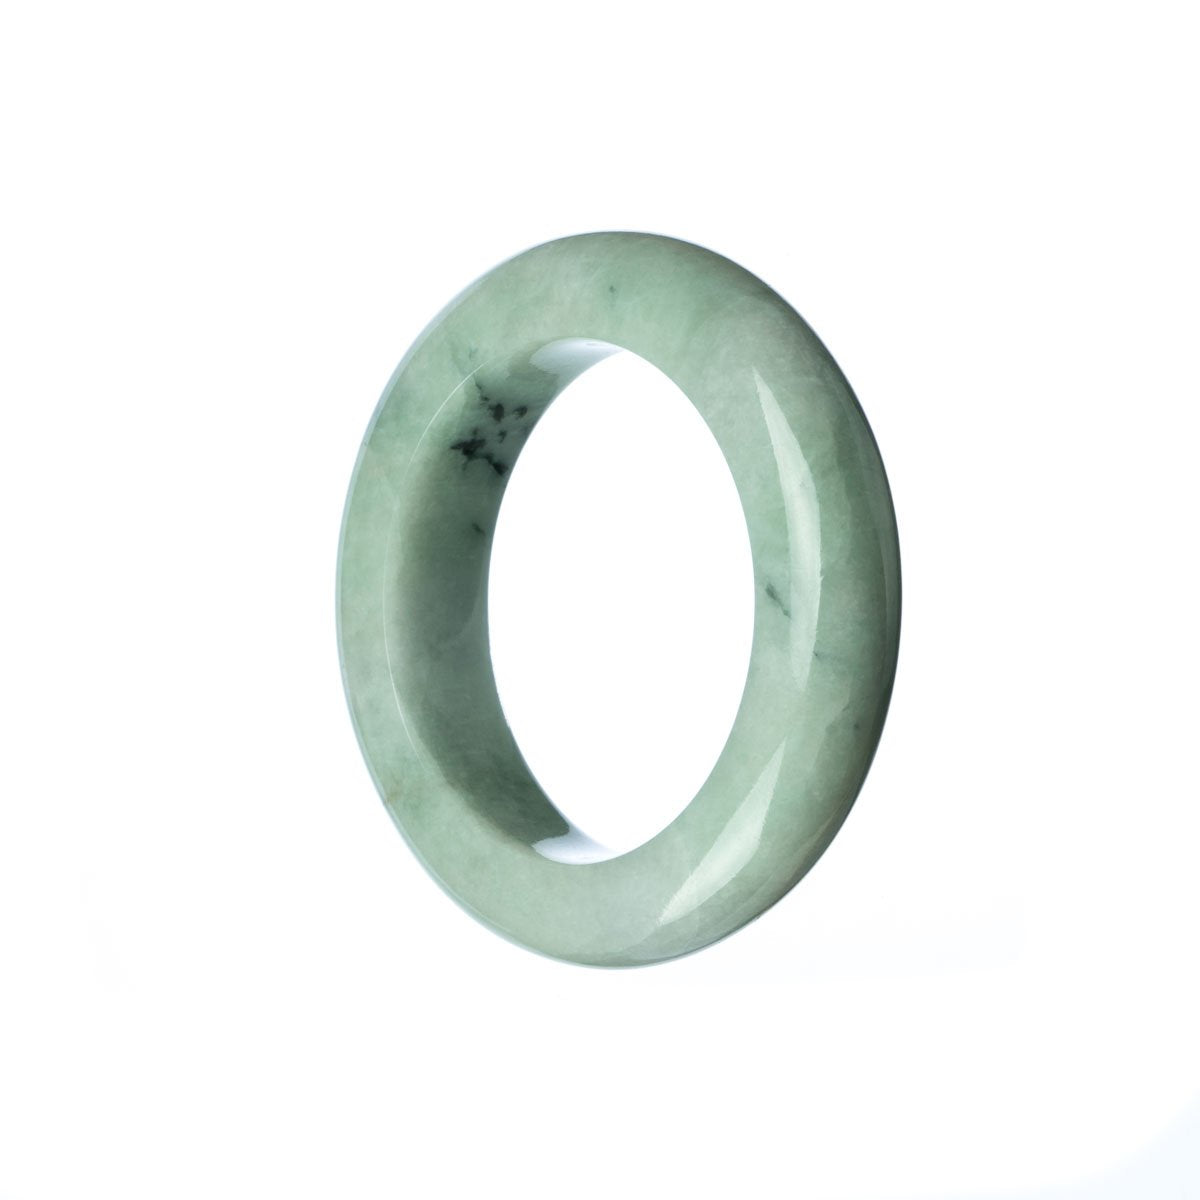 A child-sized, semi-round, green Burma Jade bangle bracelet with a genuine Type A classification.